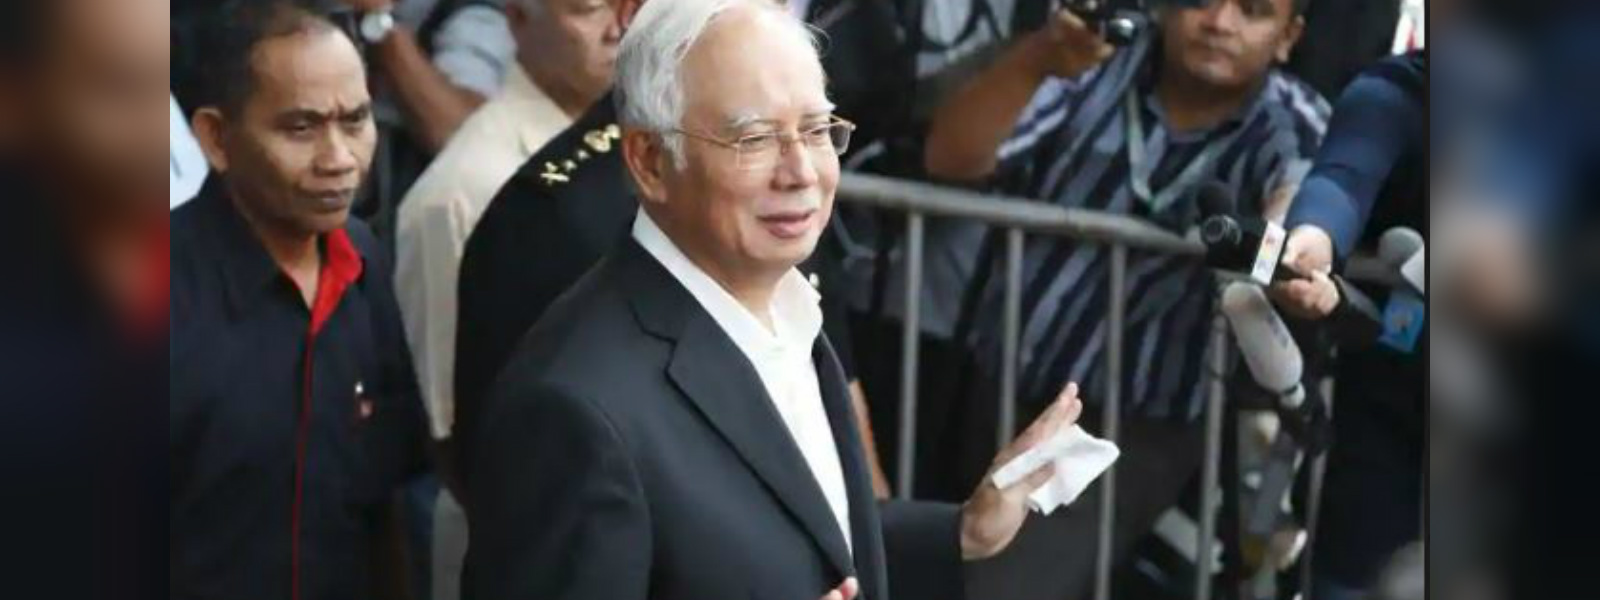 Former Malaysian PM Razak arrested over corruption